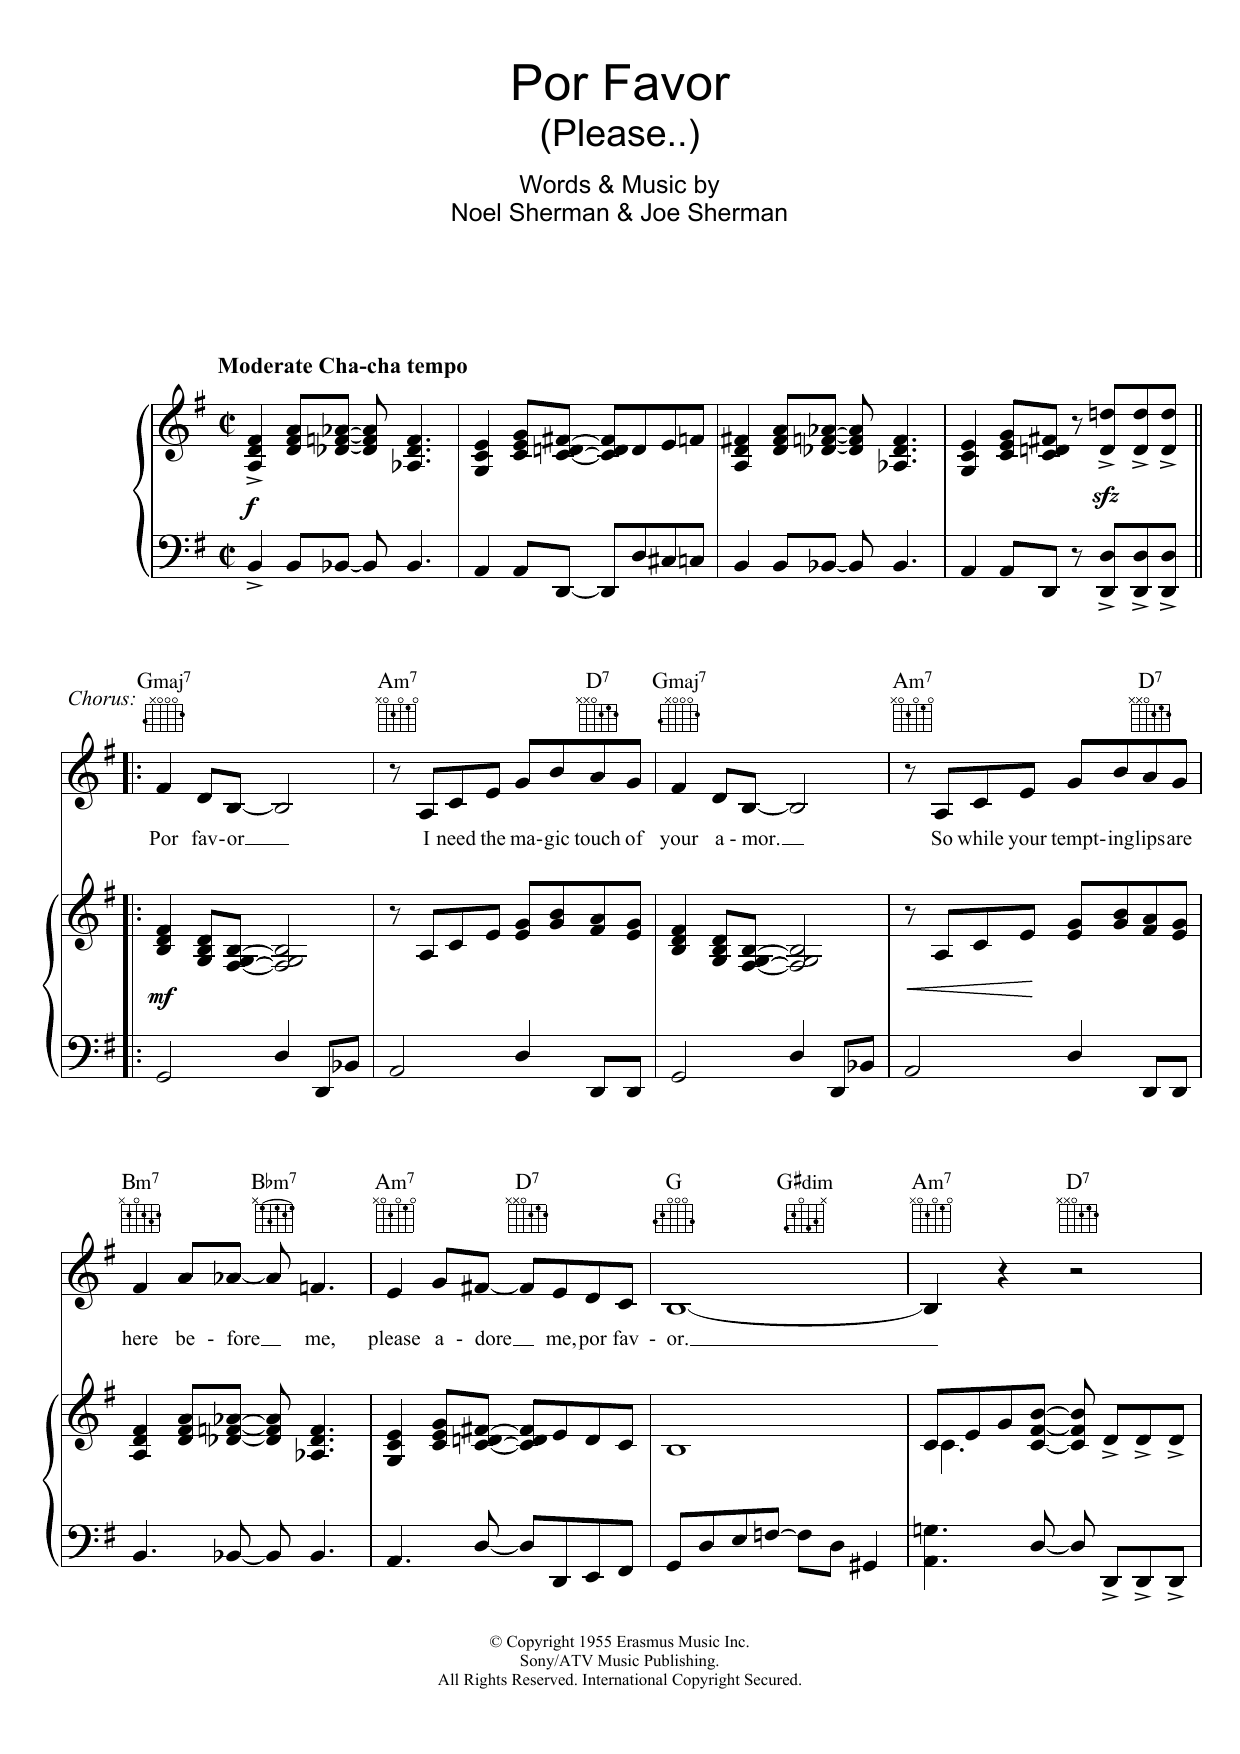 Doris Day Por Favor Sheet Music Notes & Chords for Piano, Vocal & Guitar - Download or Print PDF